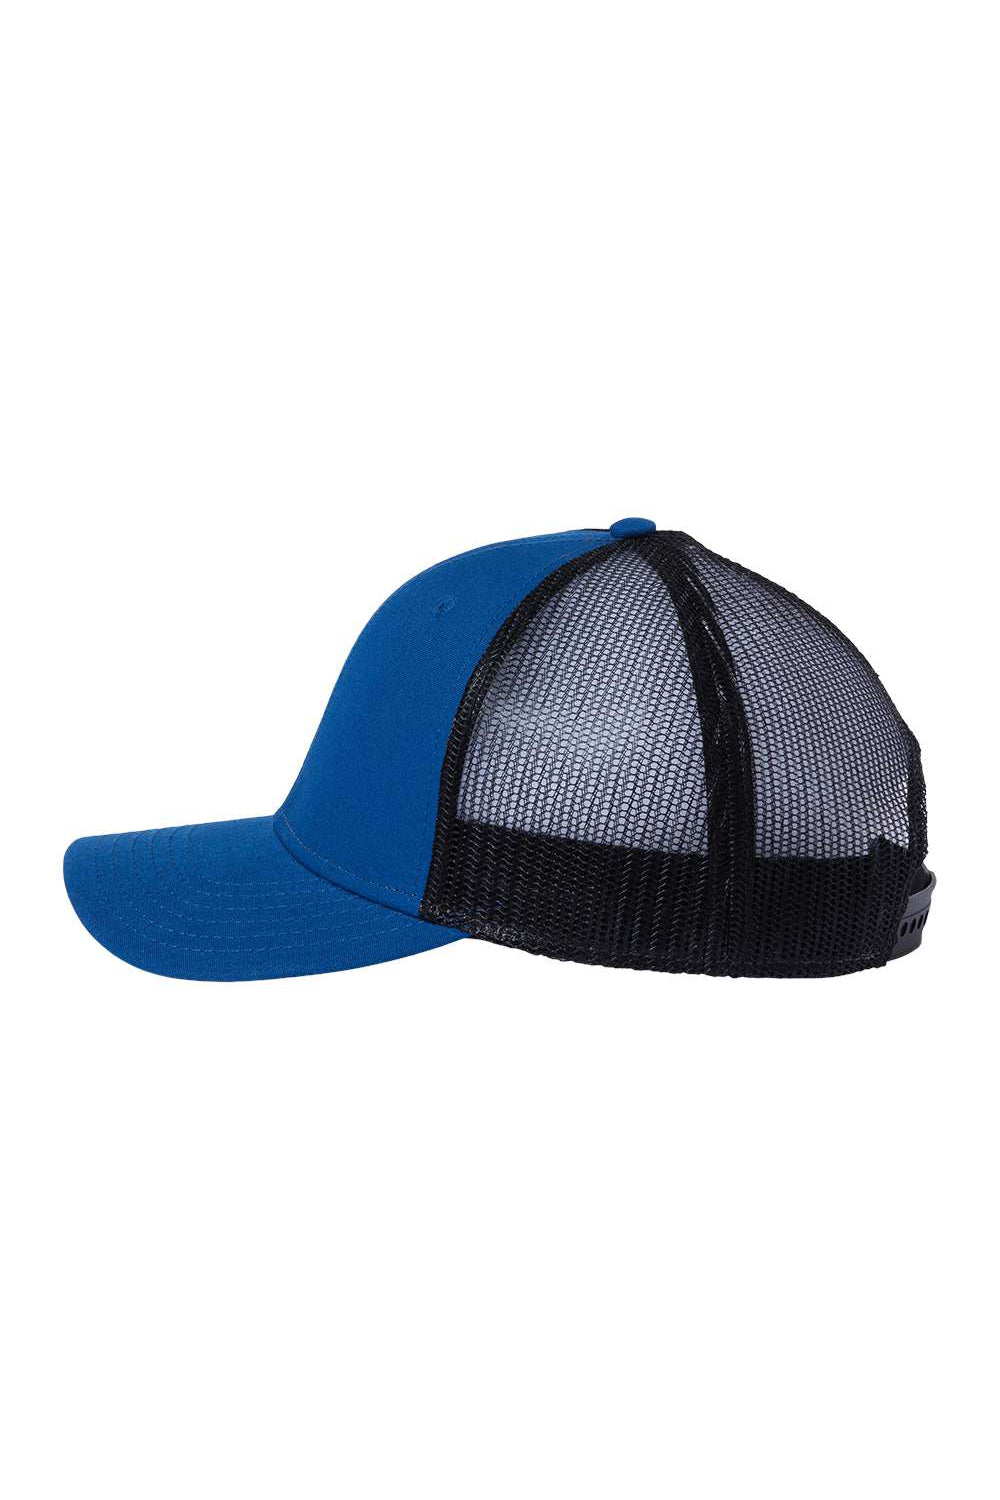 Atlantis Headwear RETH Mens Sustainable Recycled Three Snapback Trucker Hat Royal Blue/Black Flat Back